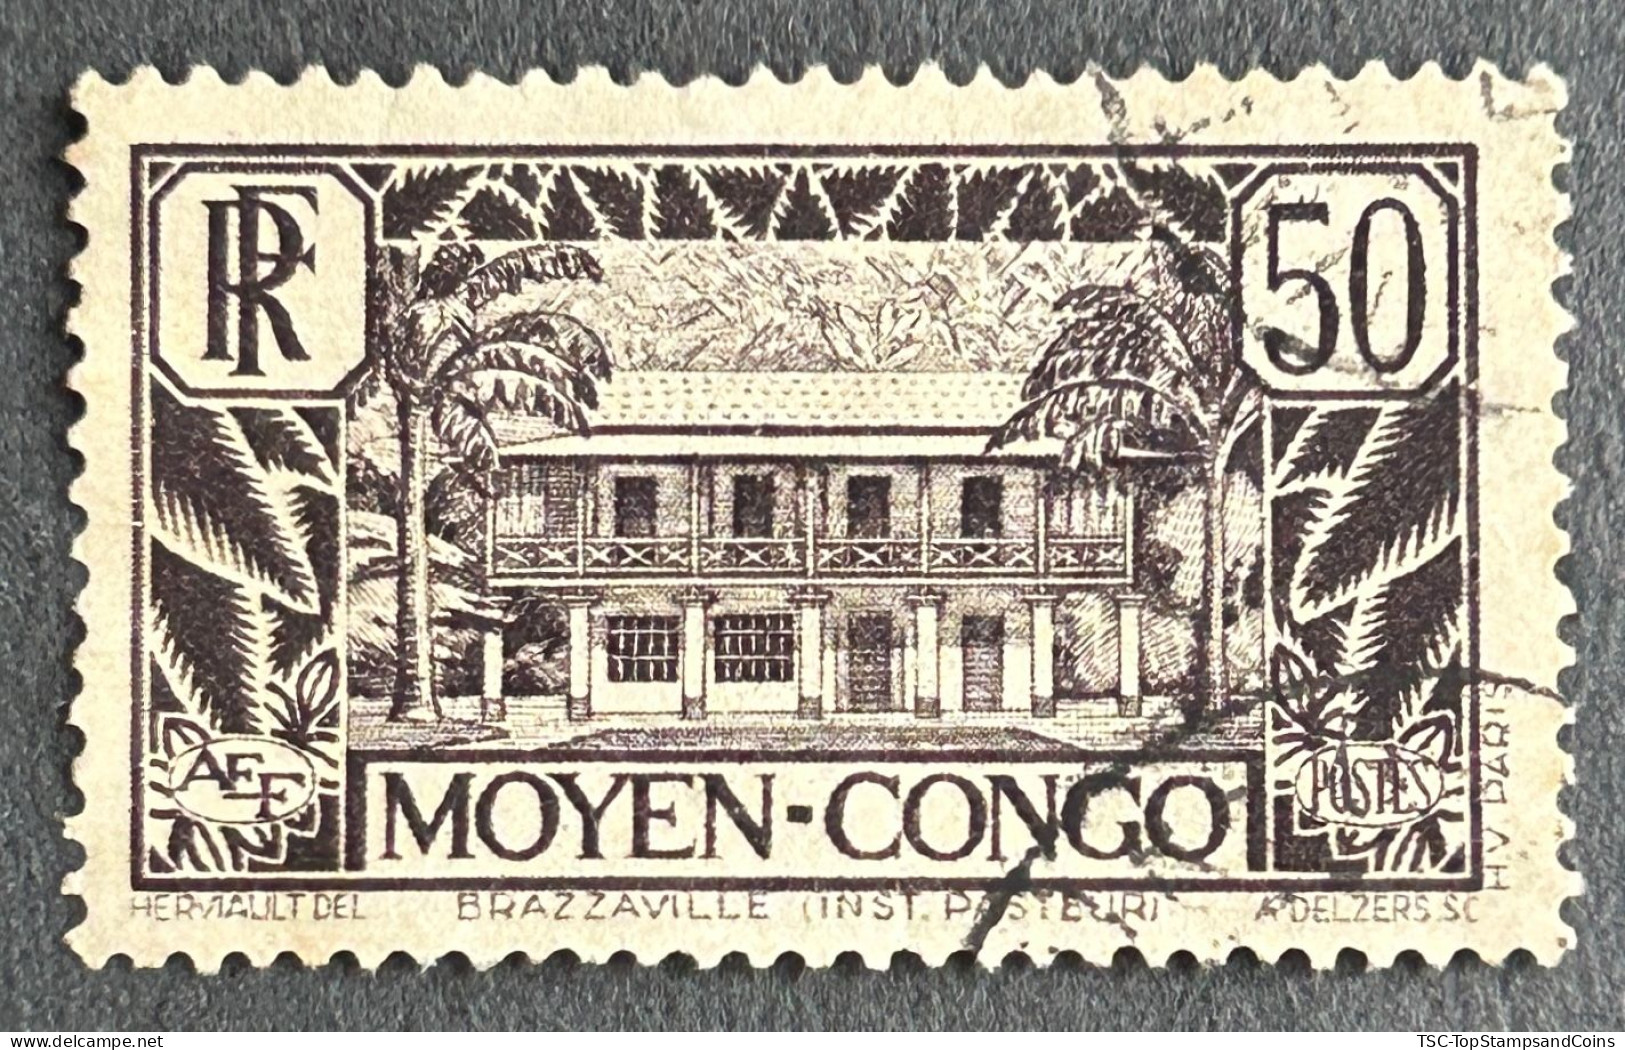 FRCG124U1 - Brazzaville - Pasteur Institute - 50 C Used Stamp - Middle Congo - 1933 - Oblitérés